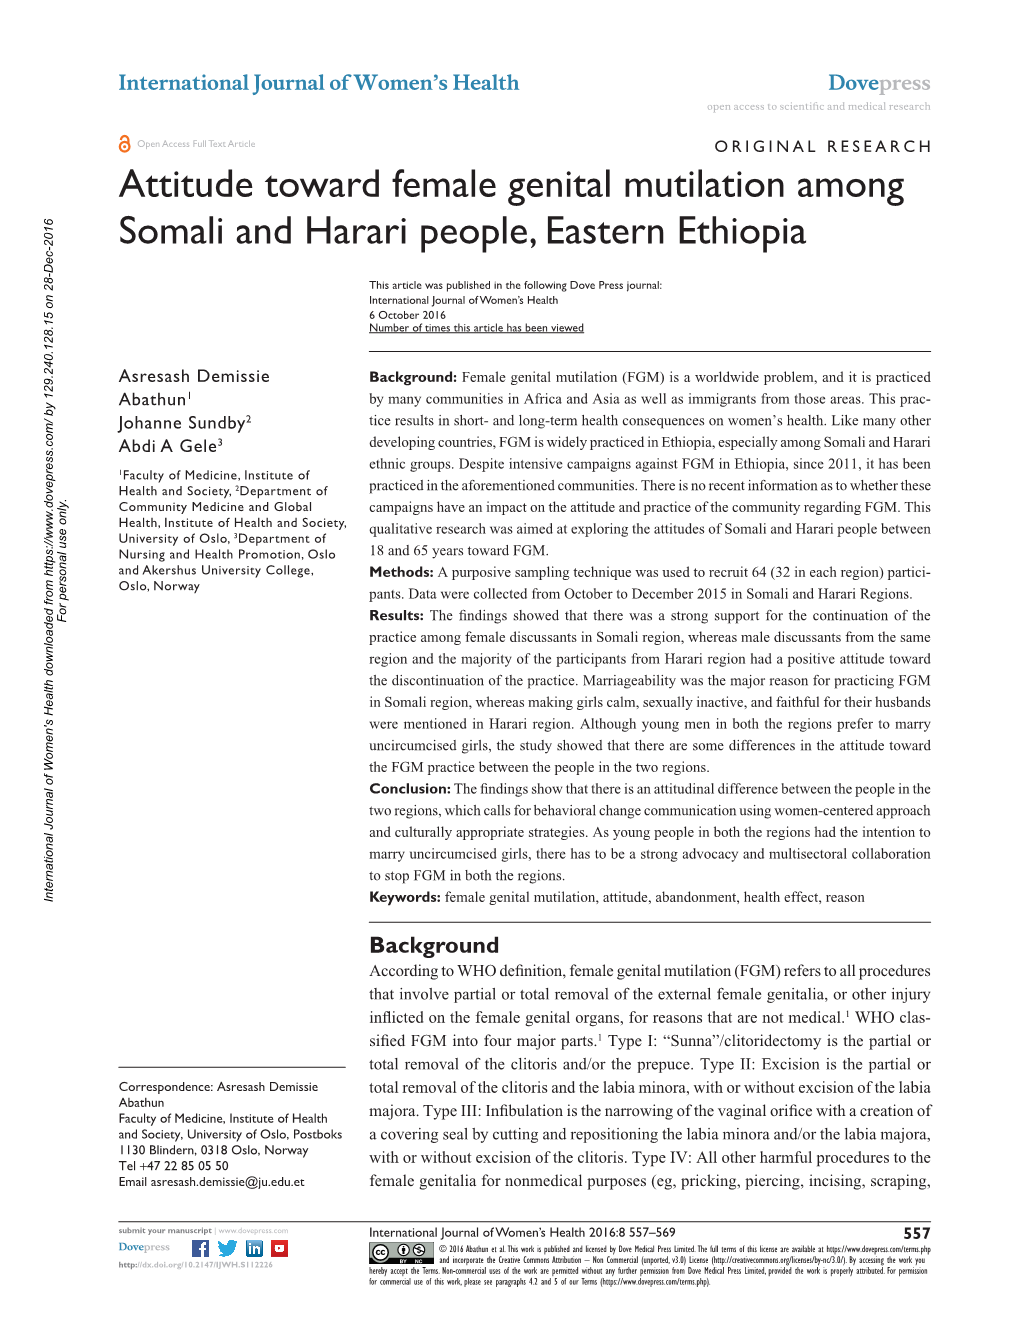 Attitude Toward Female Genital Mutilation Among Somali and Harari People, Eastern Ethiopia